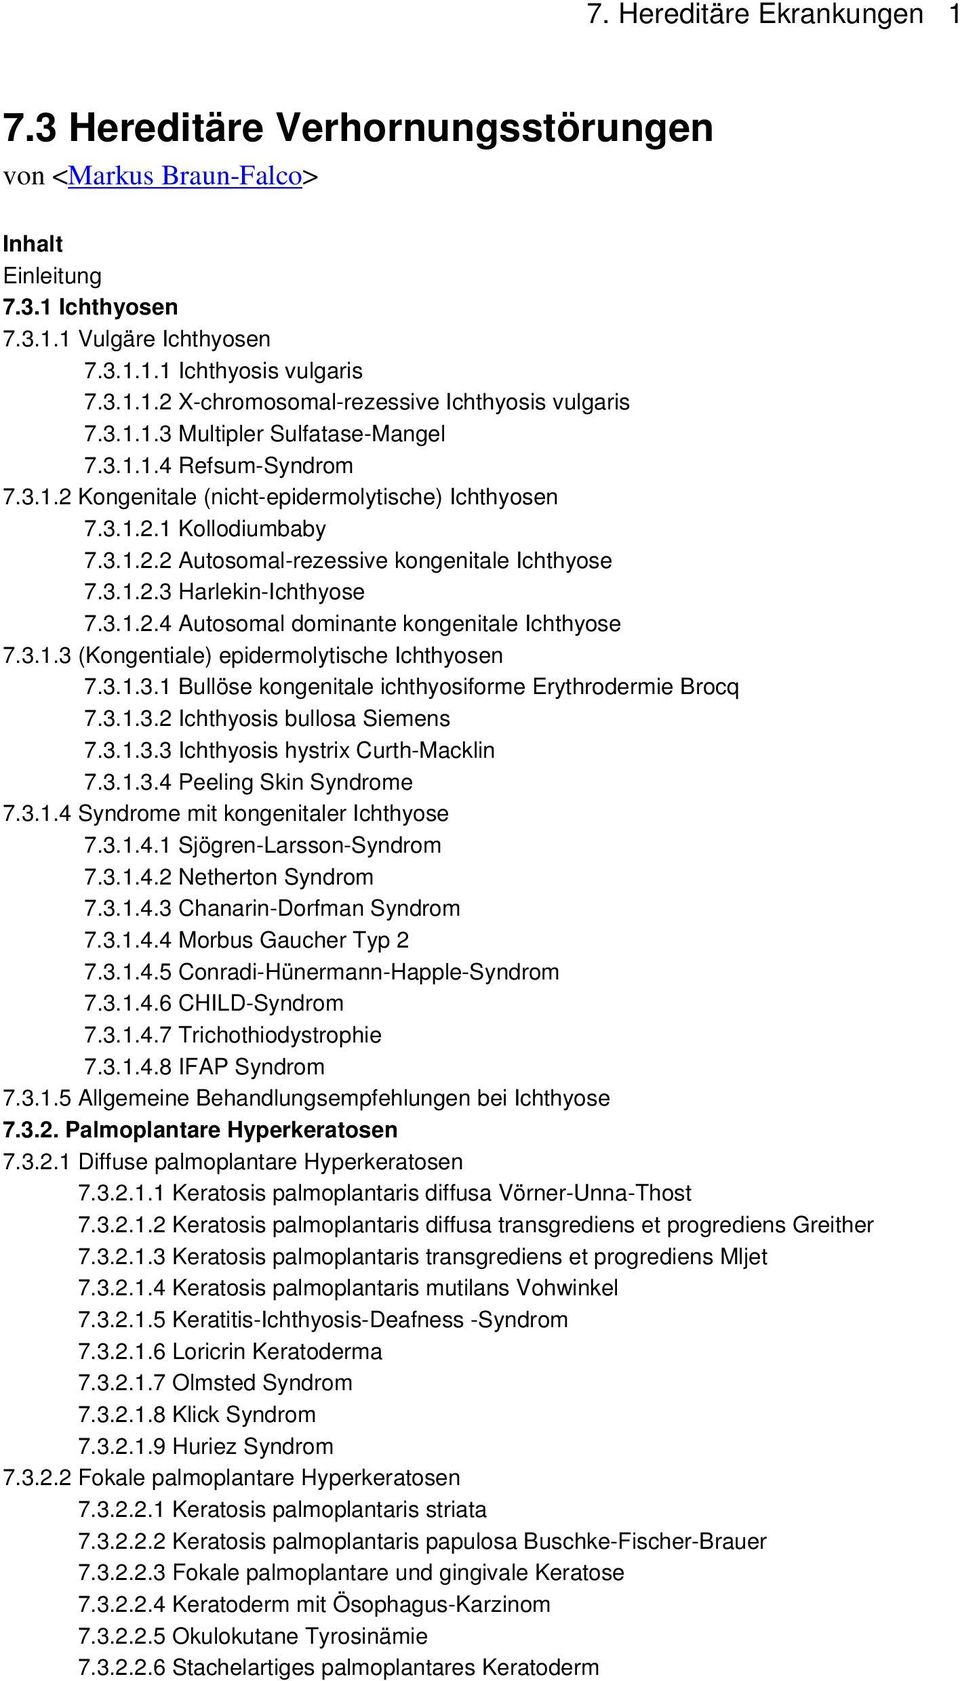 3.1.2.4 Autosomal dominante kongenitale Ichthyose 7.3.1.3 (Kongentiale) epidermolytische Ichthyosen 7.3.1.3.1 Bullöse kongenitale ichthyosiforme Erythrodermie Brocq 7.3.1.3.2 Ichthyosis bullosa Siemens 7.